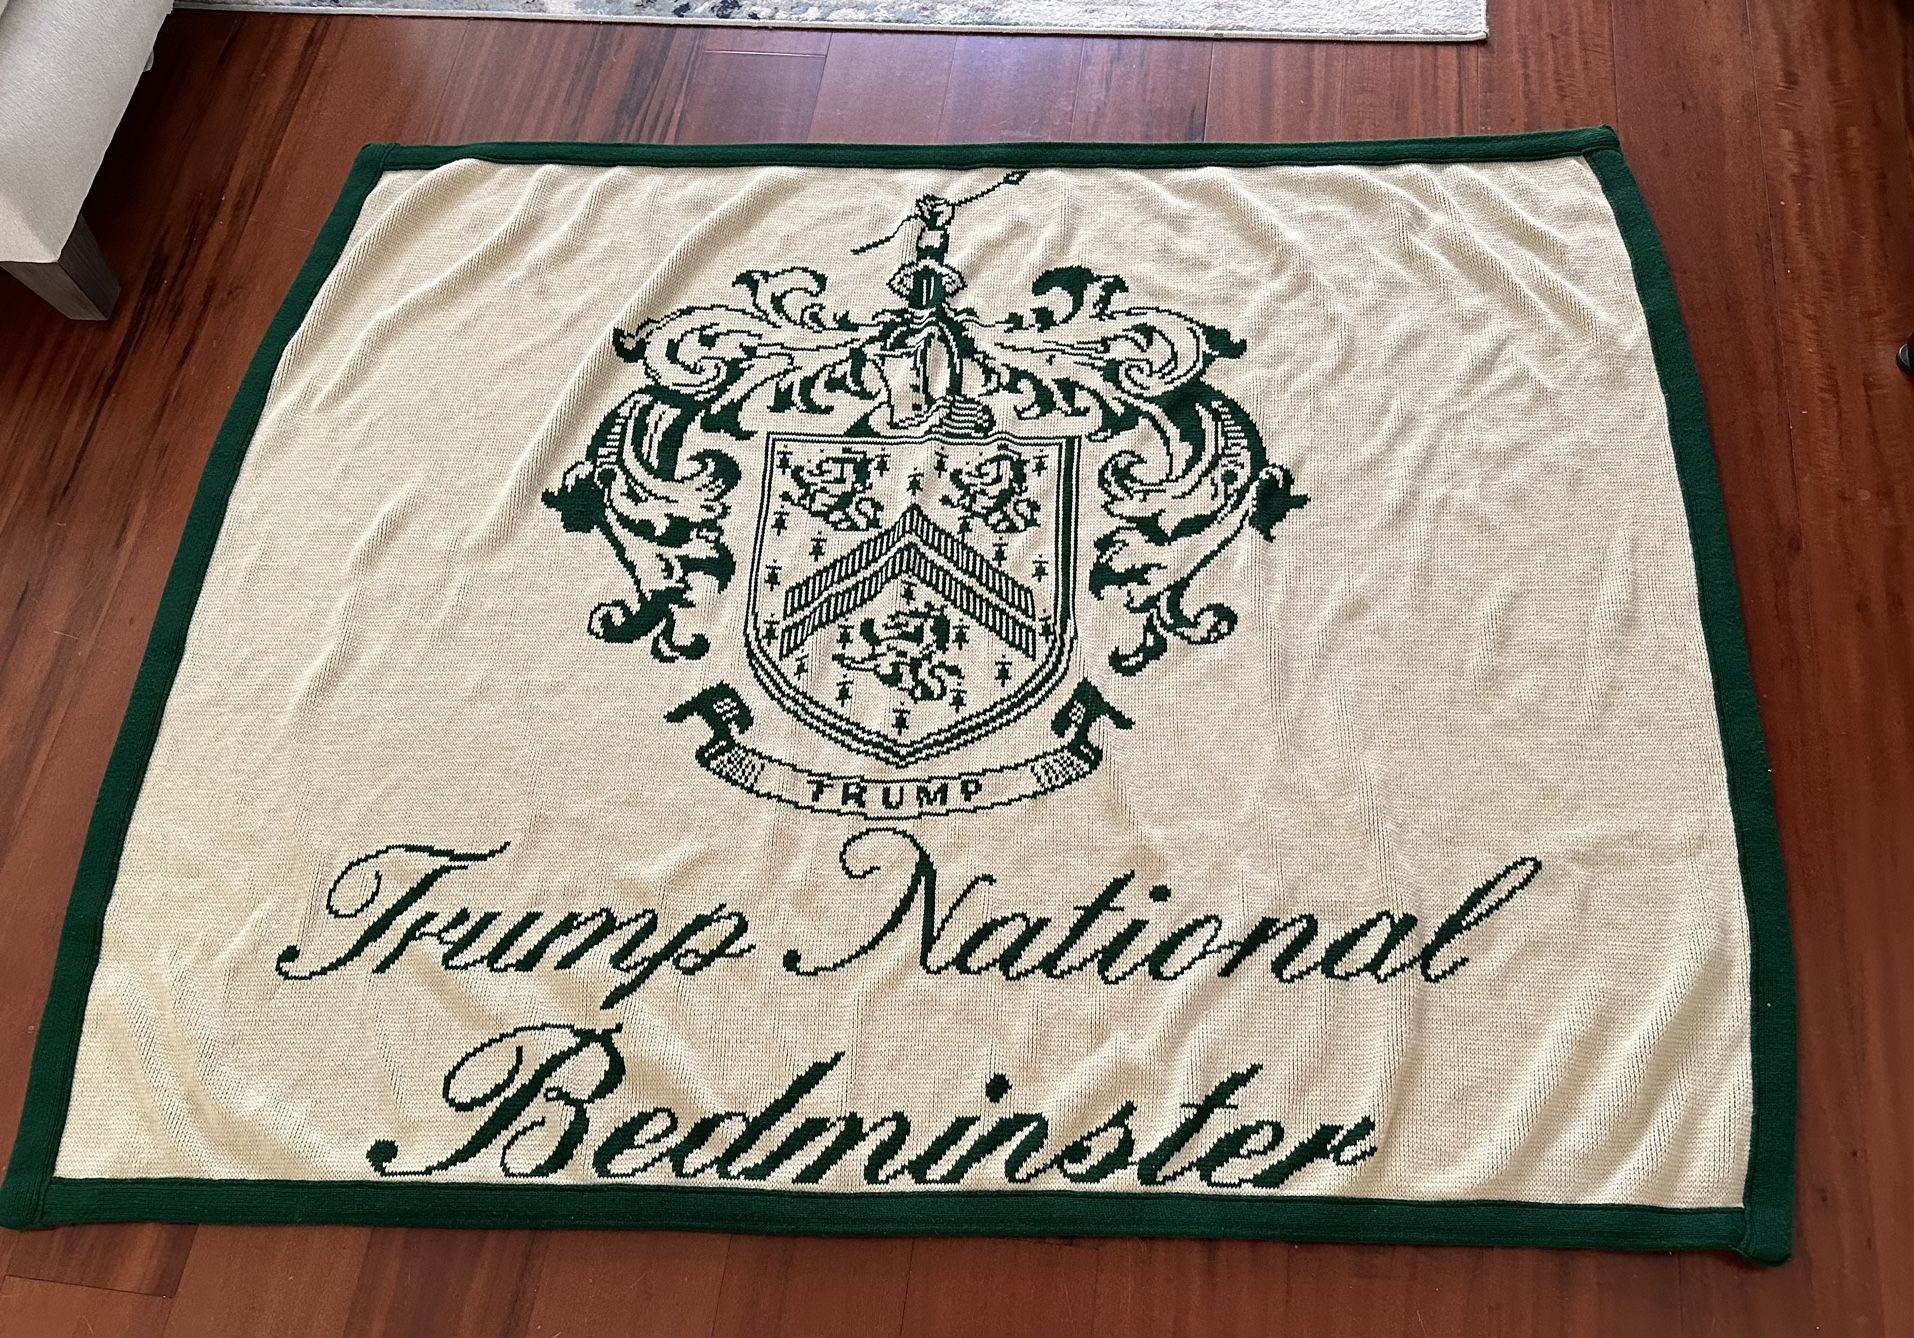 Rare! Vintage Trump National Bedminster 50x63 Throw Blanket 